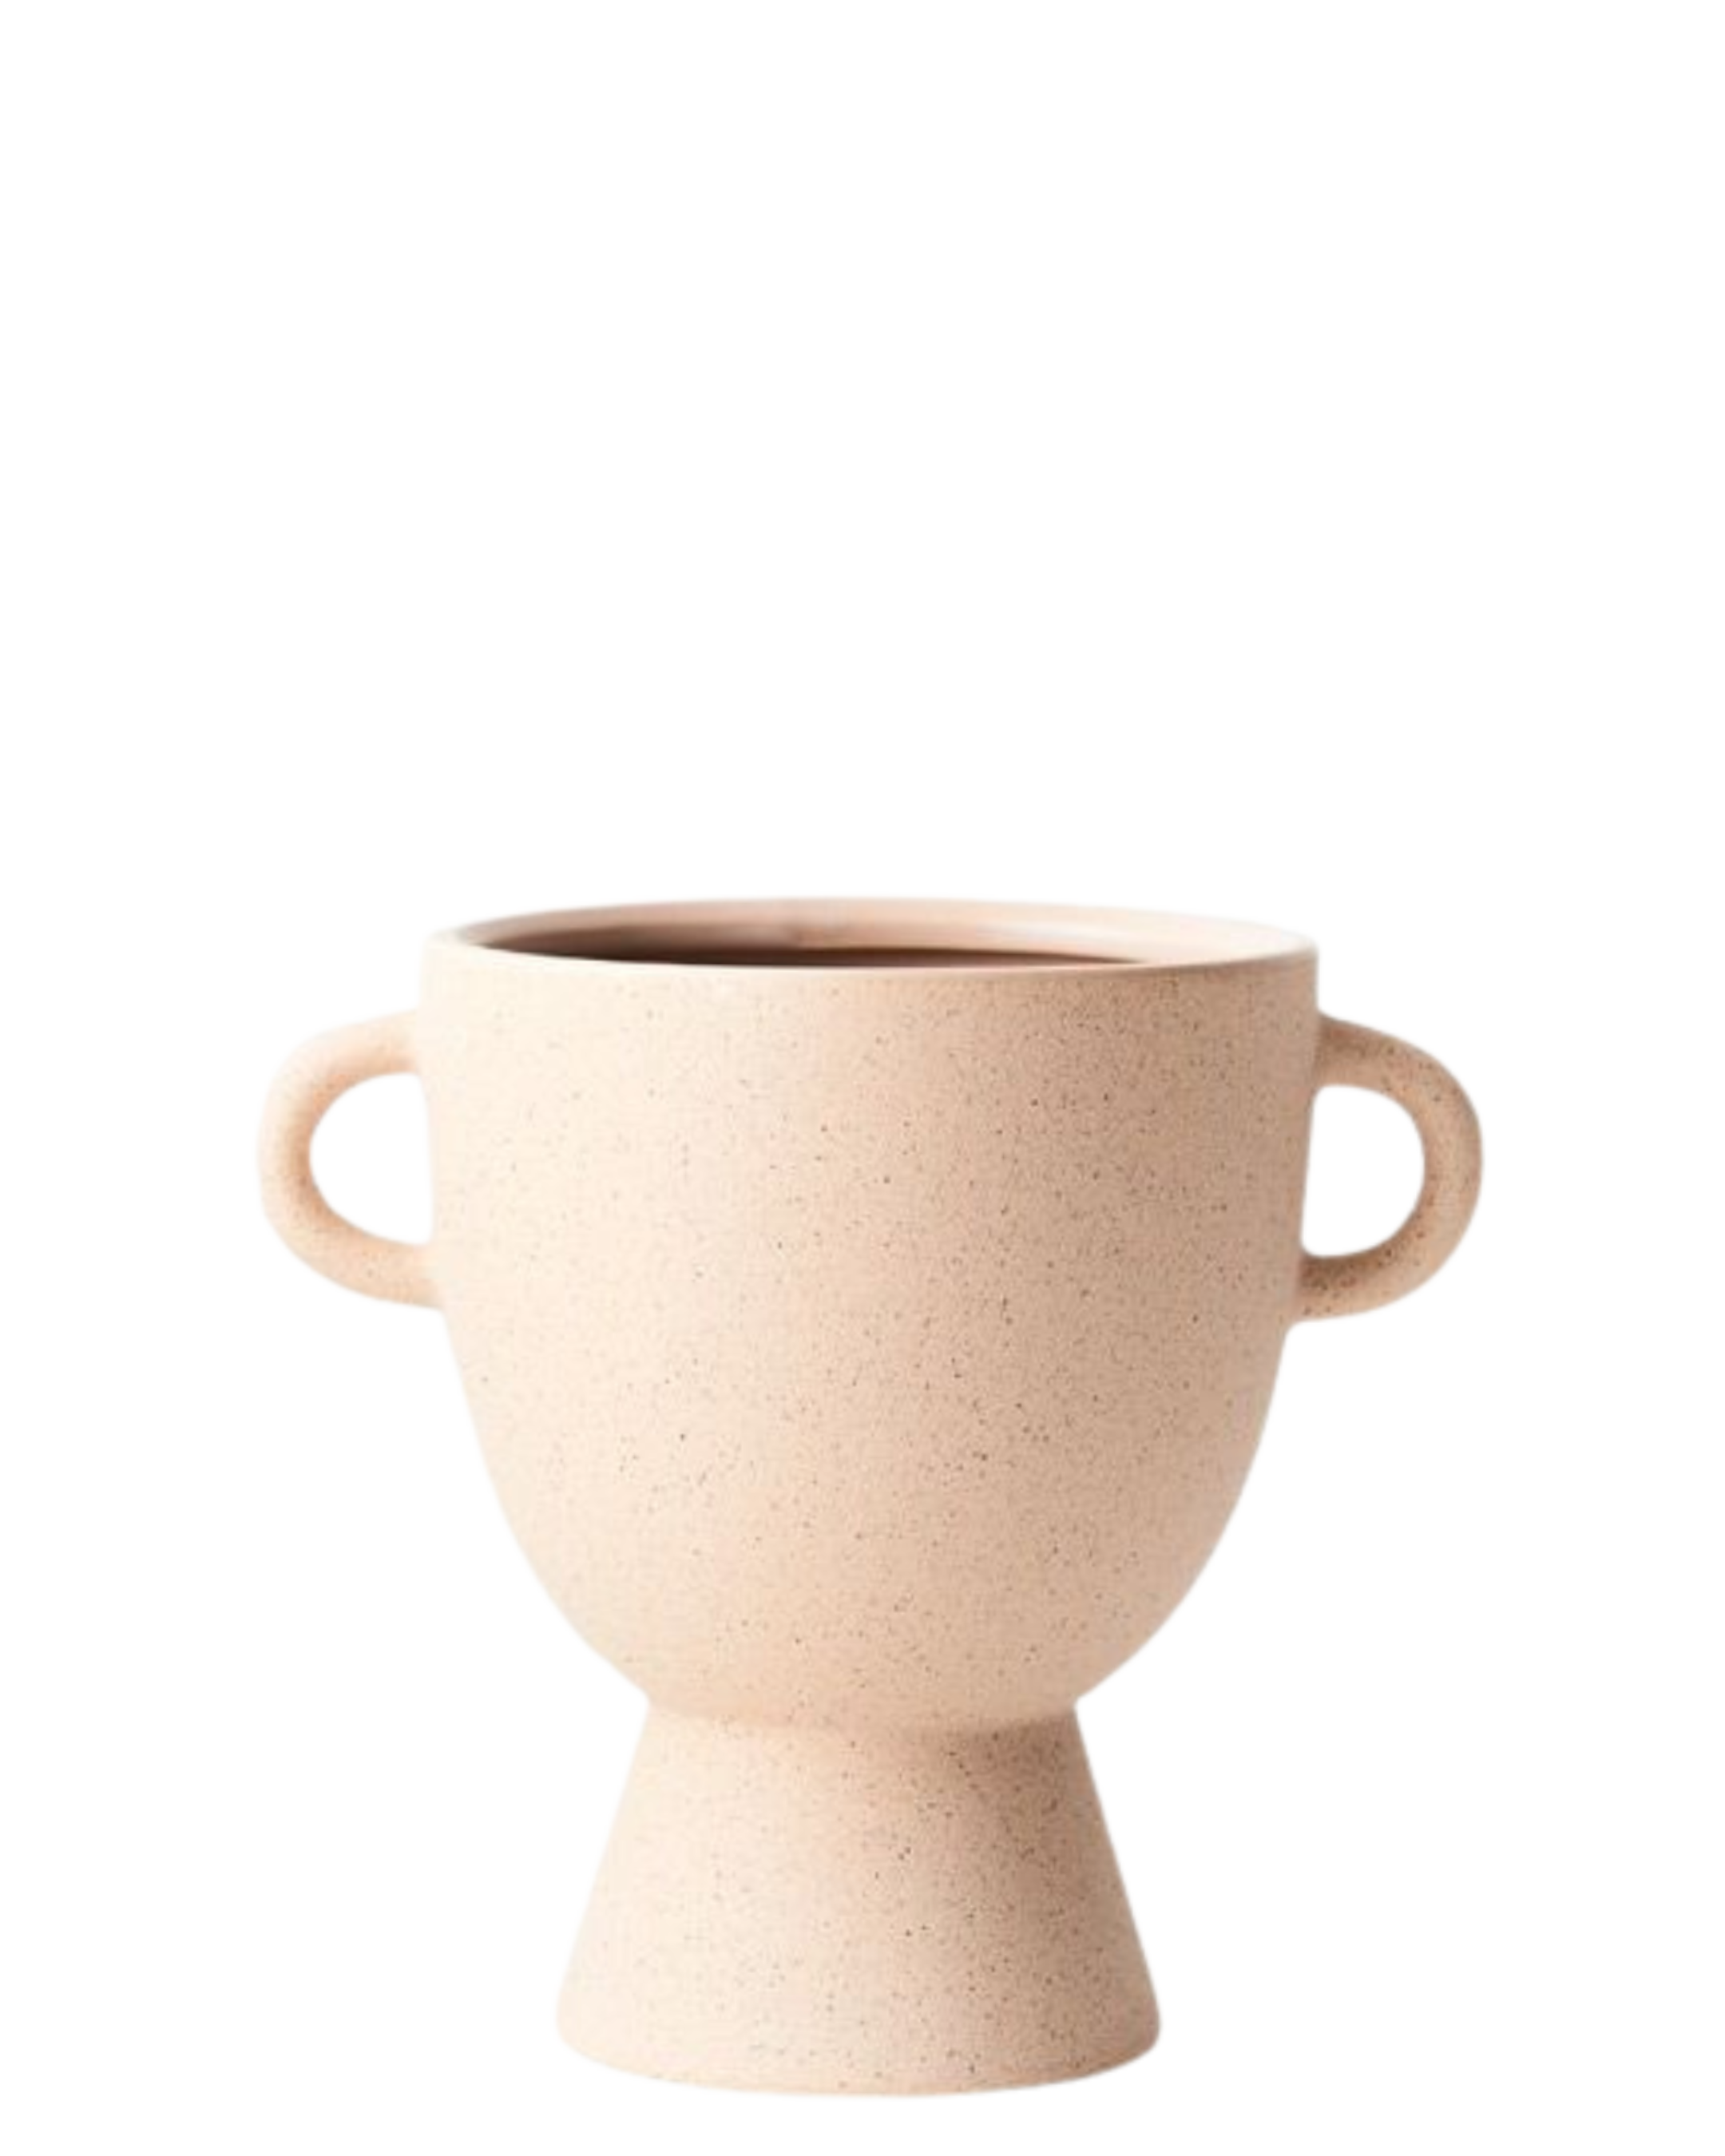 Mona Vase